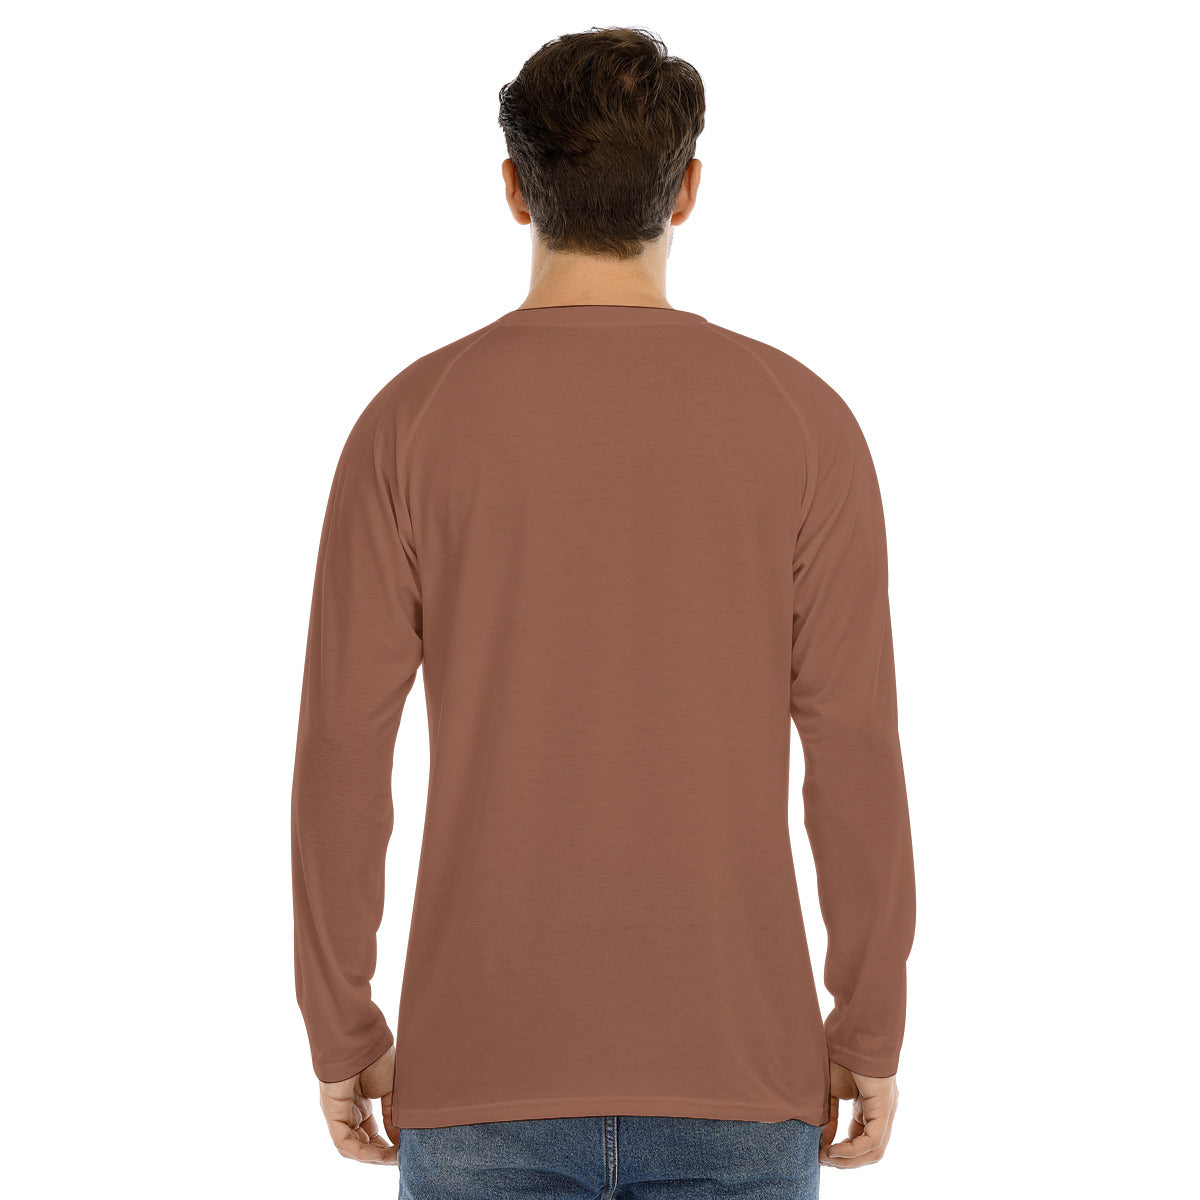 Abstract 101 -- Men's Long Sleeve T-shirt With Raglan Sleeve